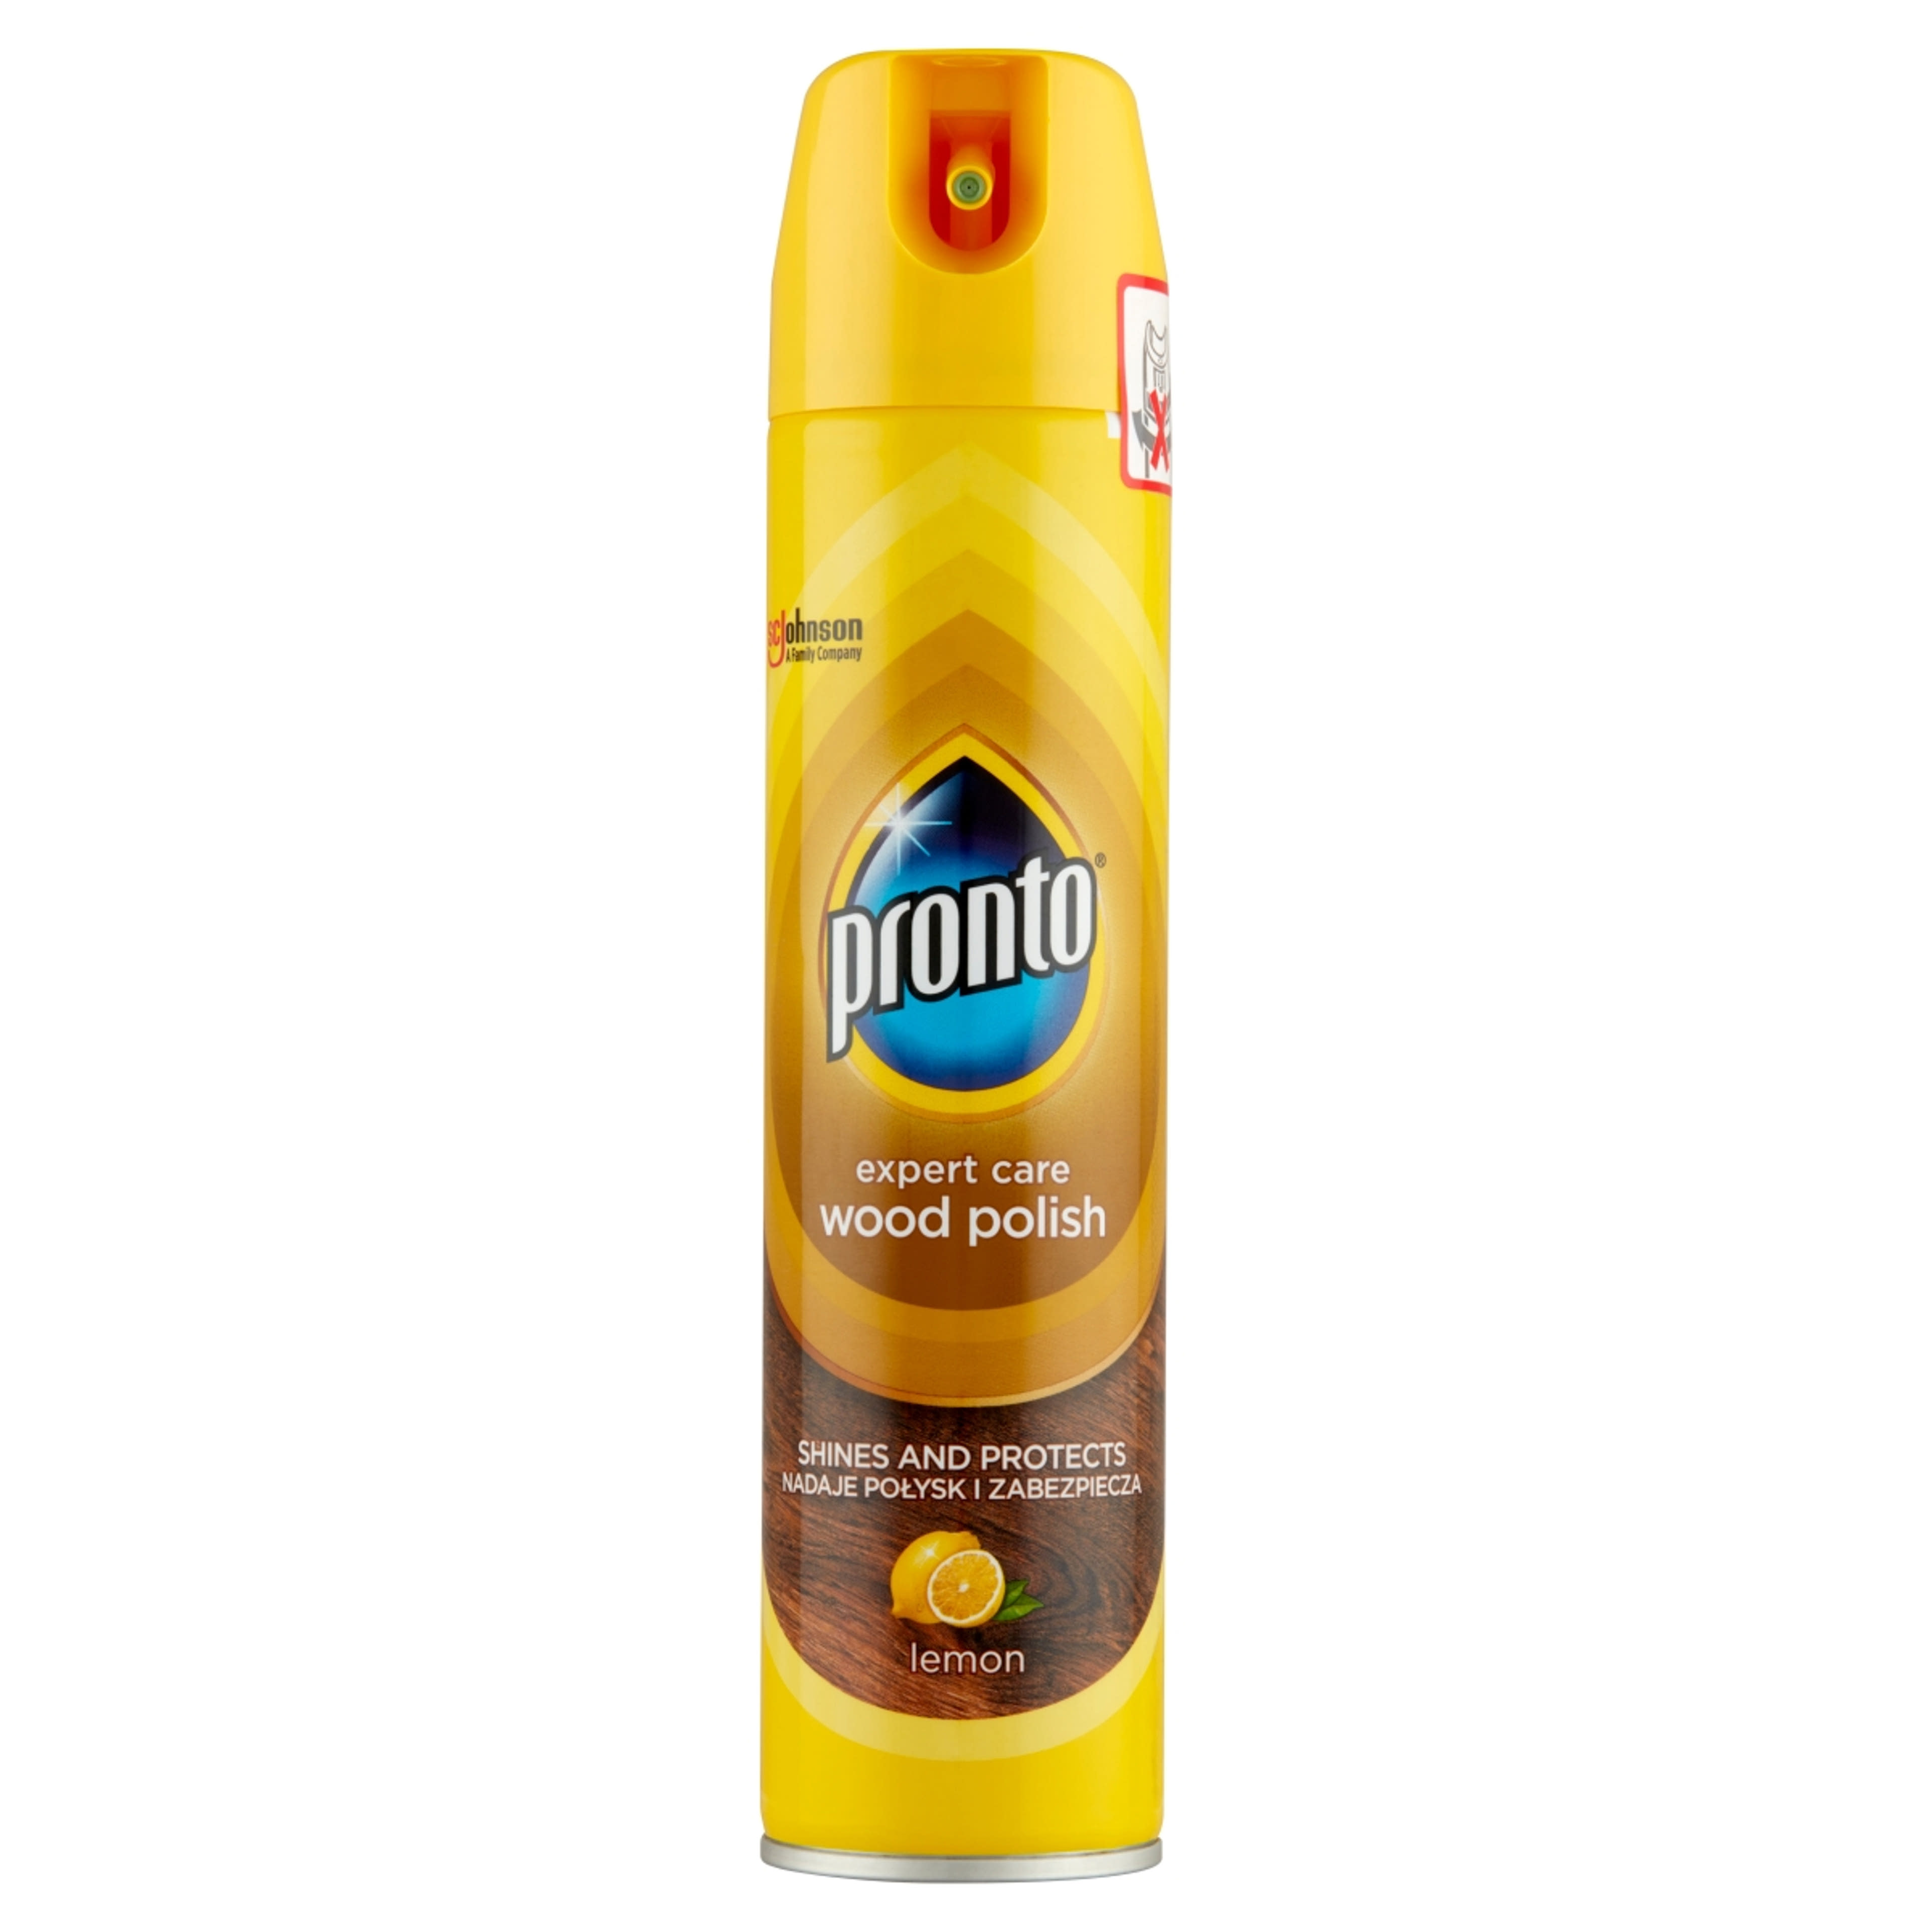 Pronto aerosol wood lemon - 250 ml